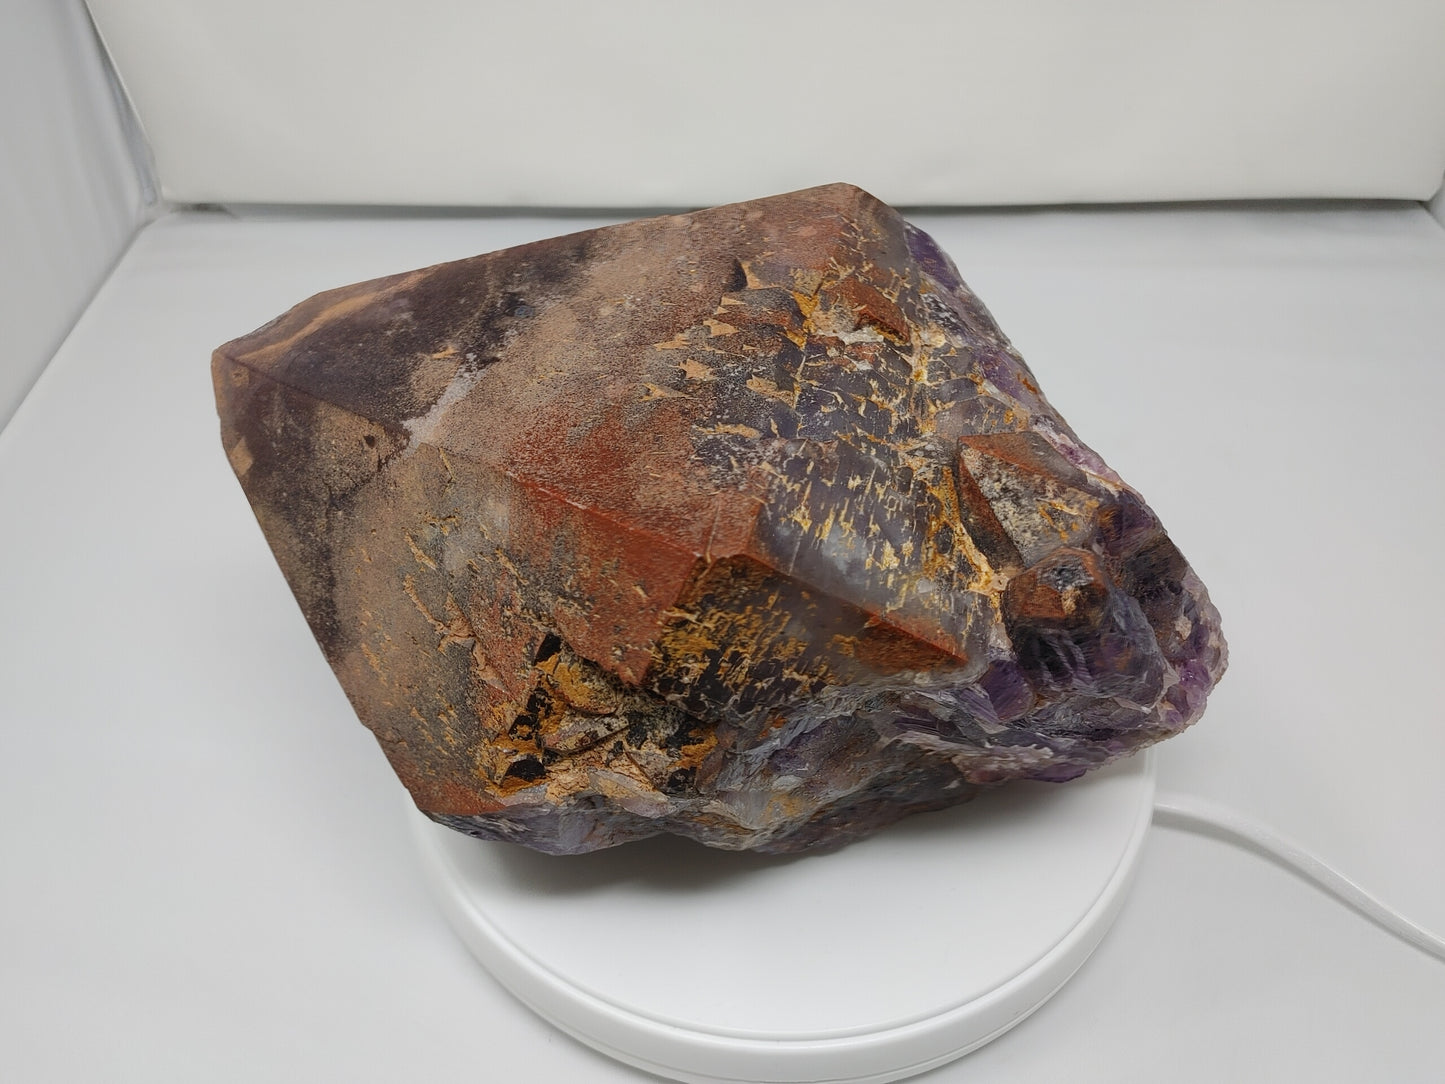 Giant Amethyst Crystal (16" long), Thunder Bay, Ontario, Canada